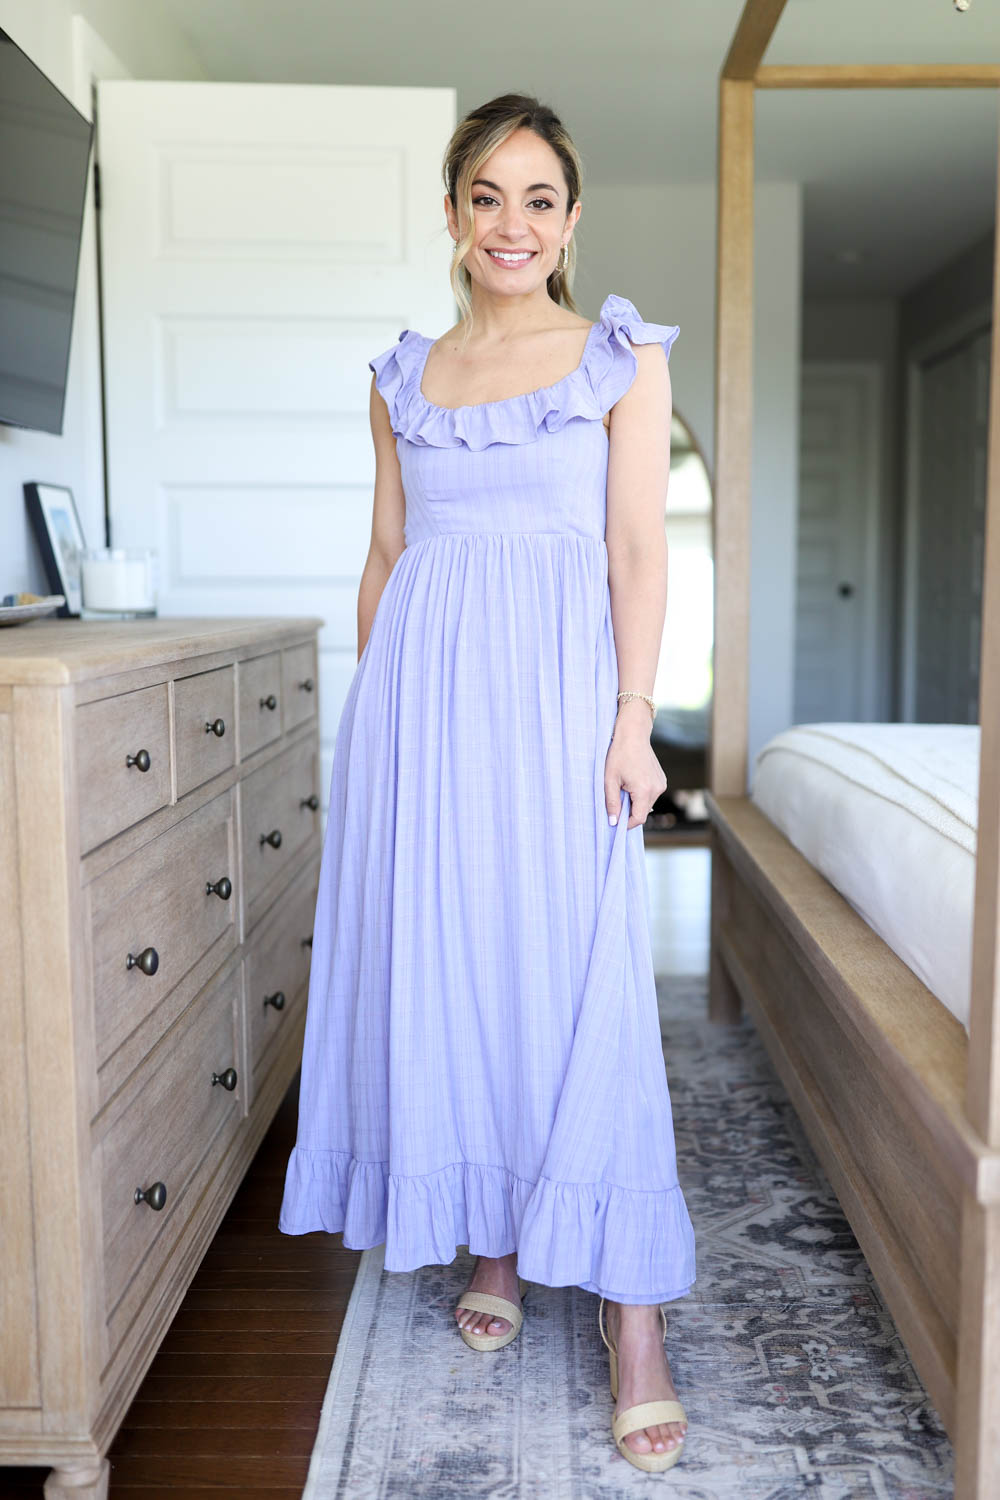 Petite-friendly maxi dress from Amazon via pumps and push-ups blog | Maxi dresses for petites | summer maxi dresses | petite fashion | petite style 